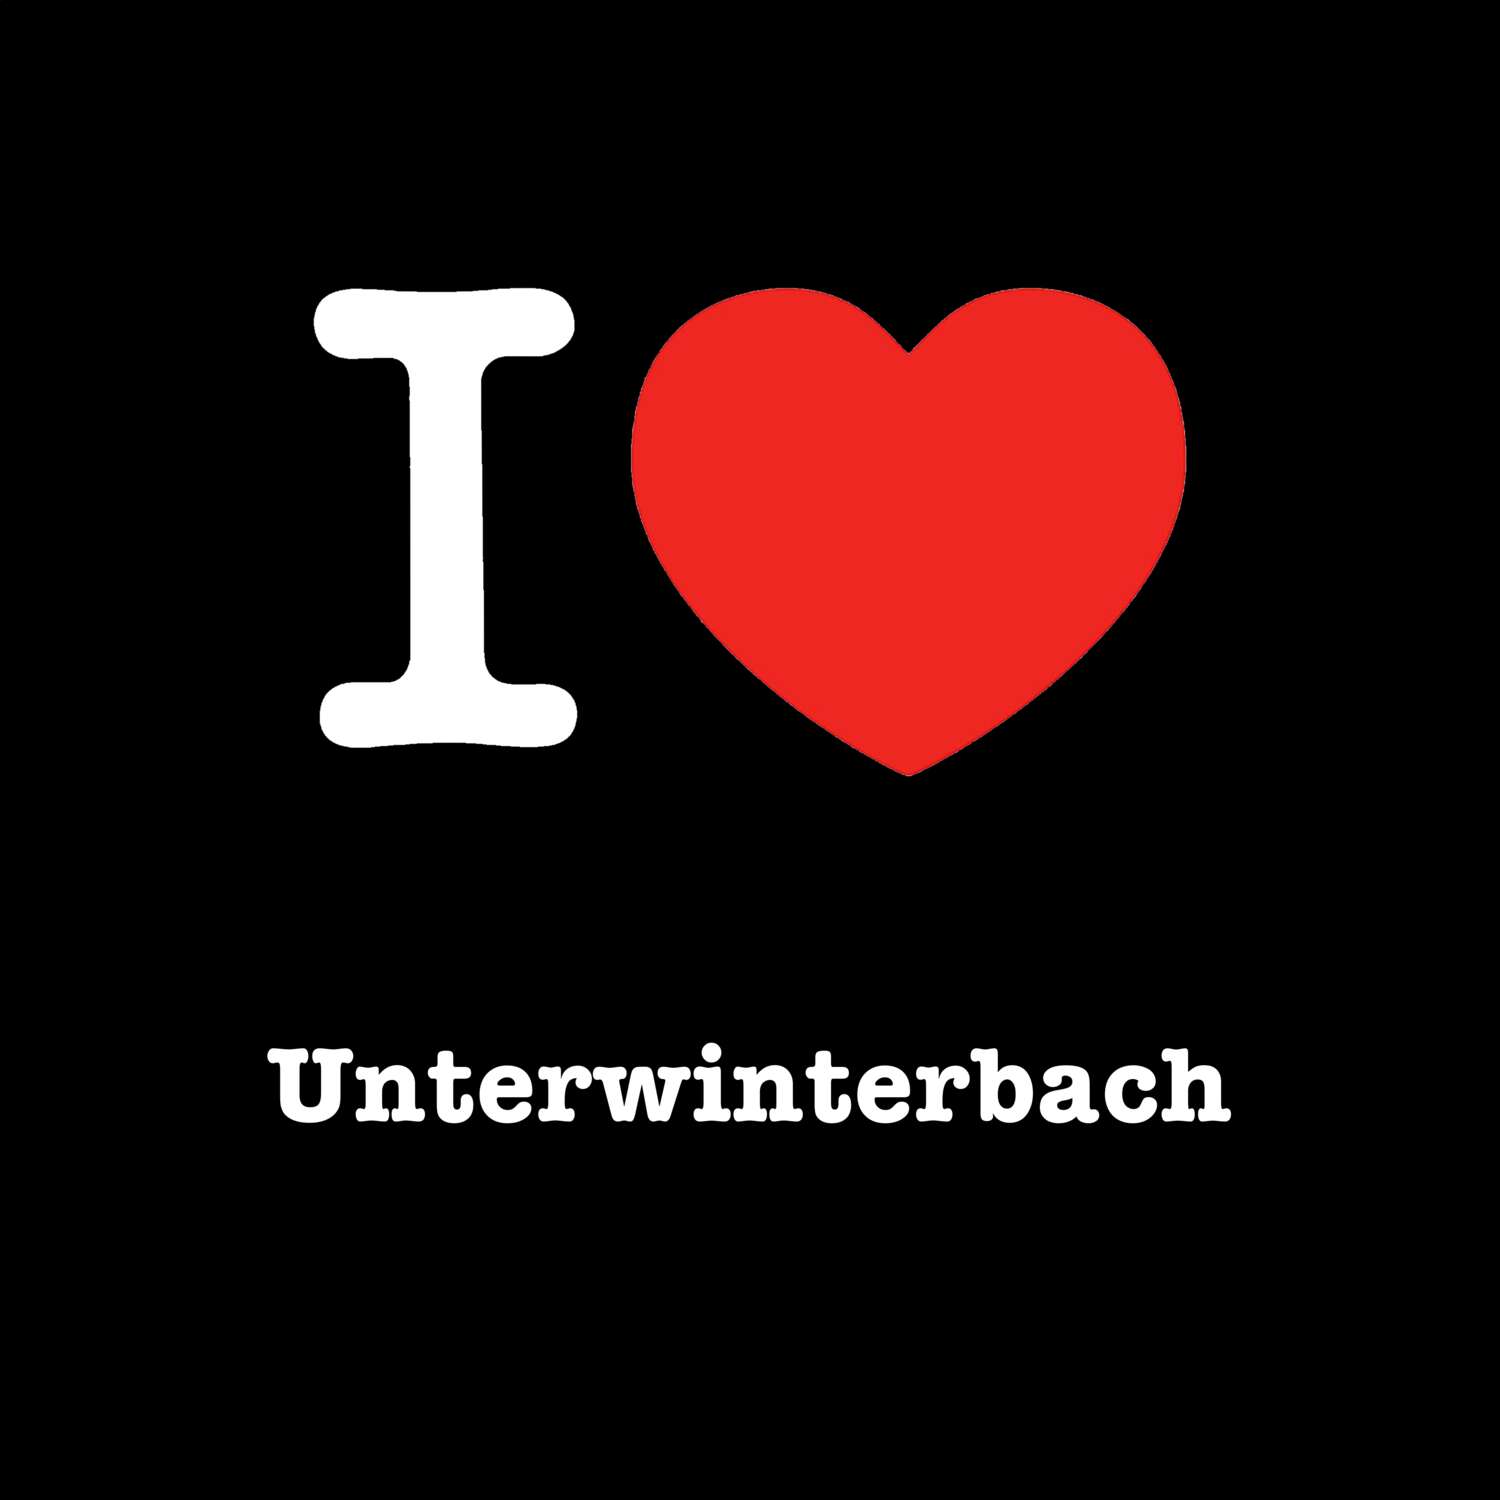 Unterwinterbach T-Shirt »I love«